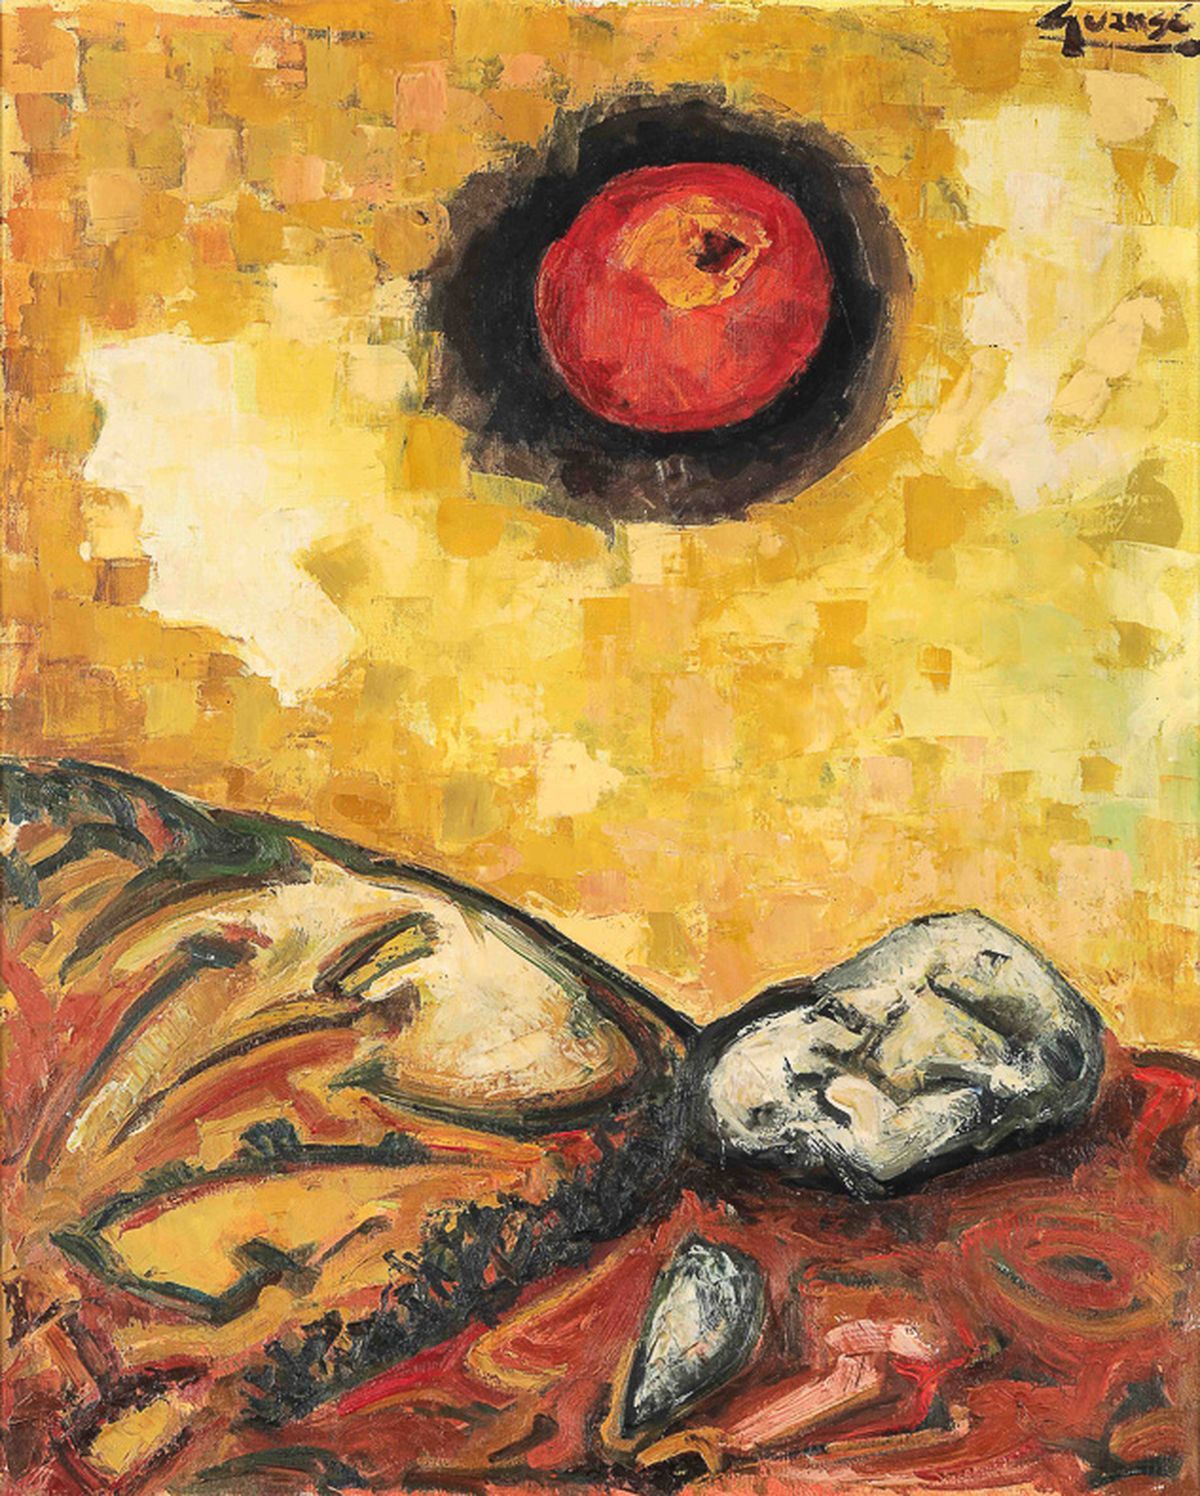 Null 
安东尼奥-关塞 (1926-2008)
"红太阳" 布面油画
布面油画，右上角有签名
92 x 73 cm